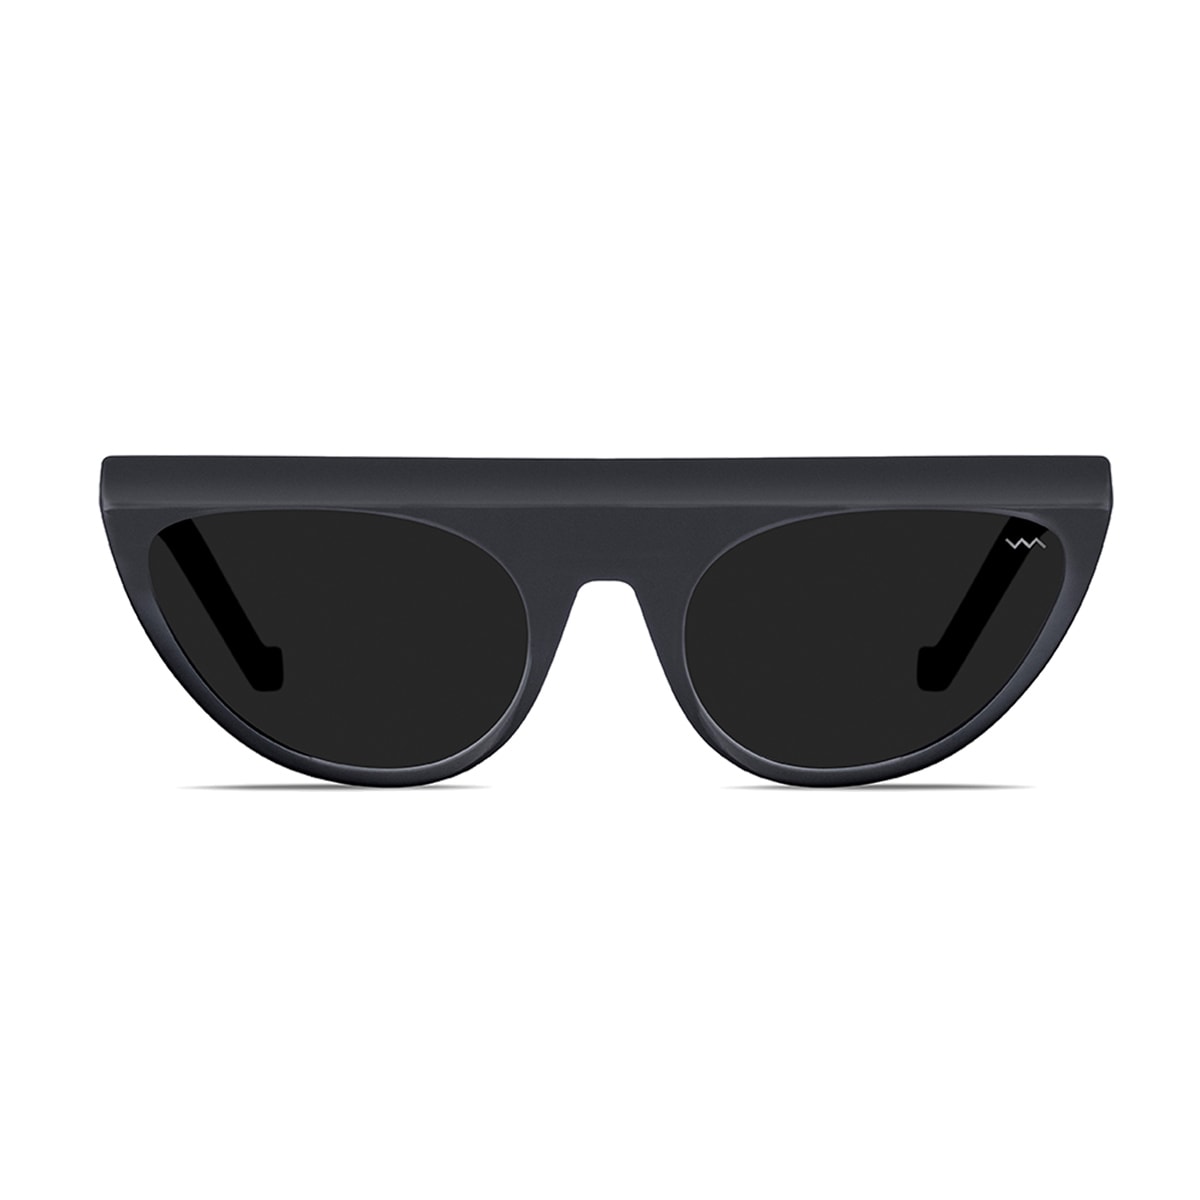 Bl0027 Black Label Black Matte Sunglasses